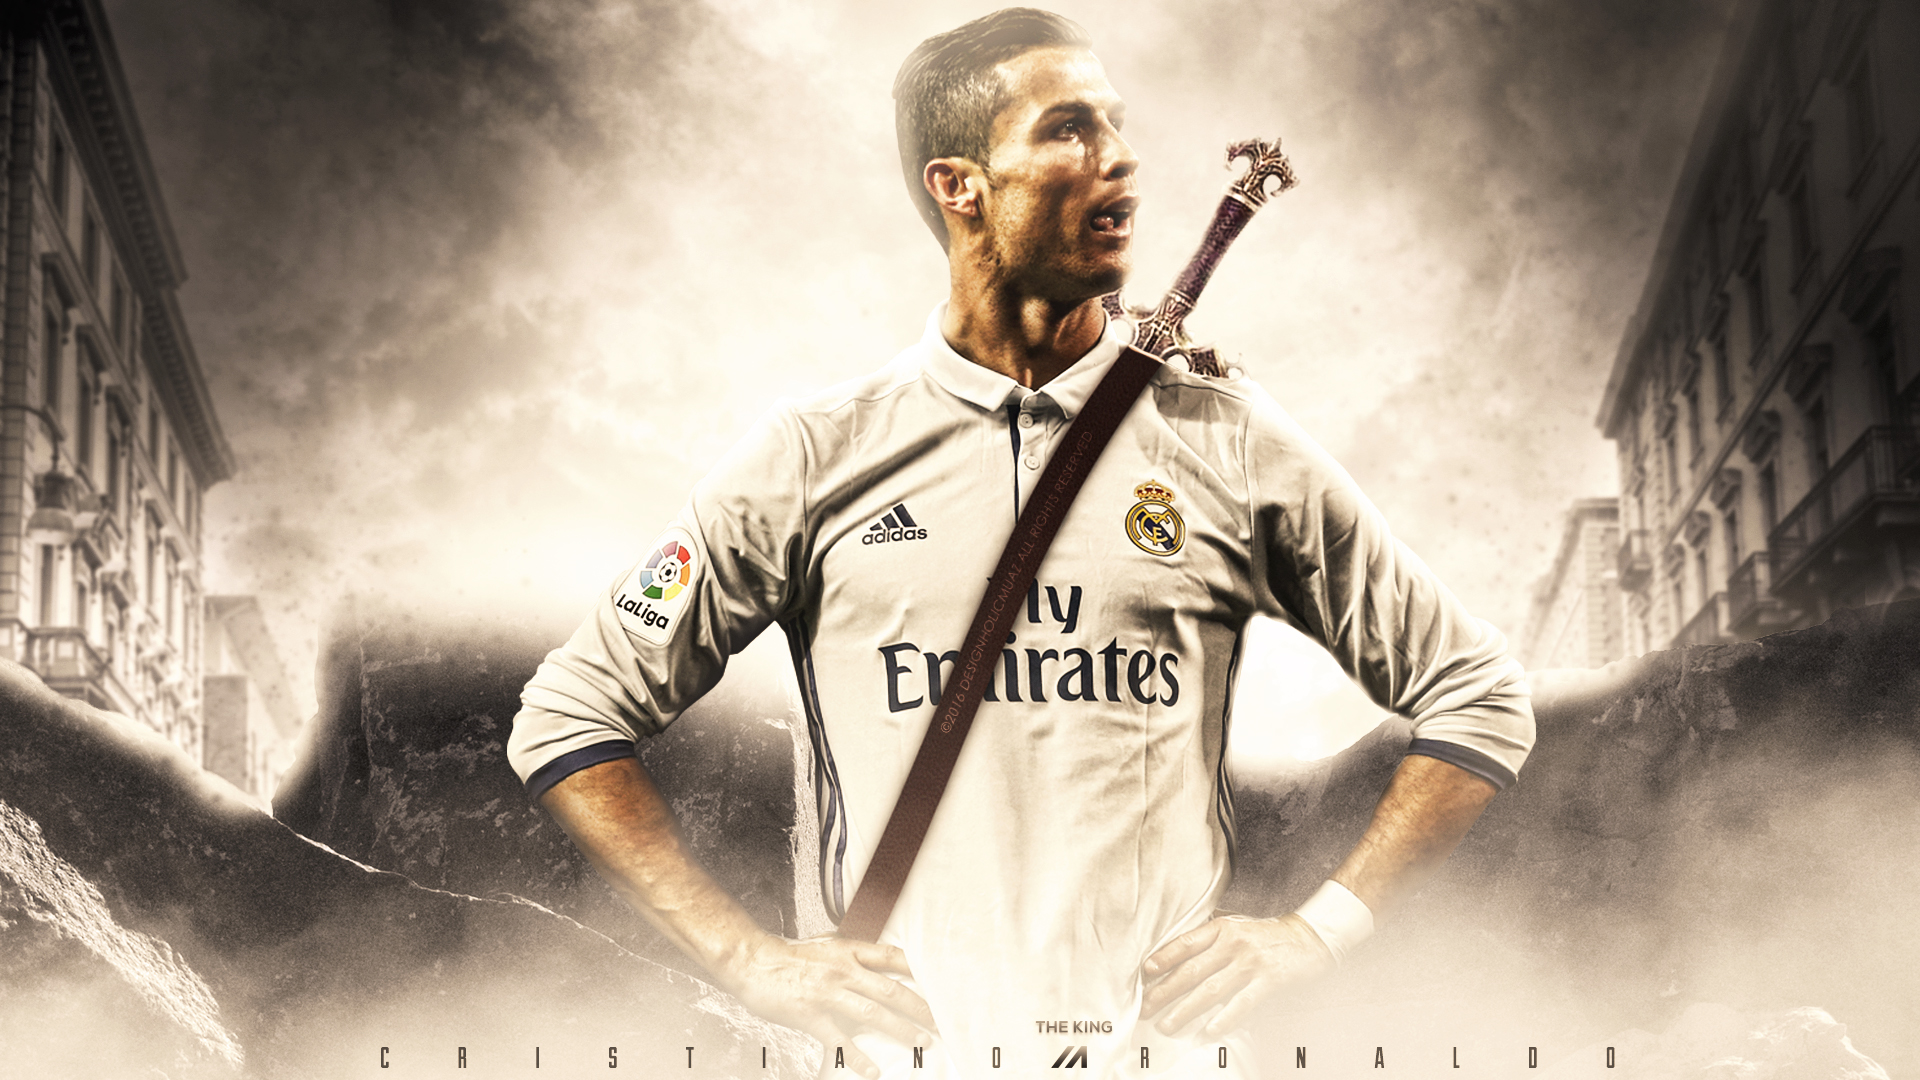 Cristiano Ronaldo as THE KING desktop wallpaper by muajbinanwar on  DeviantArt